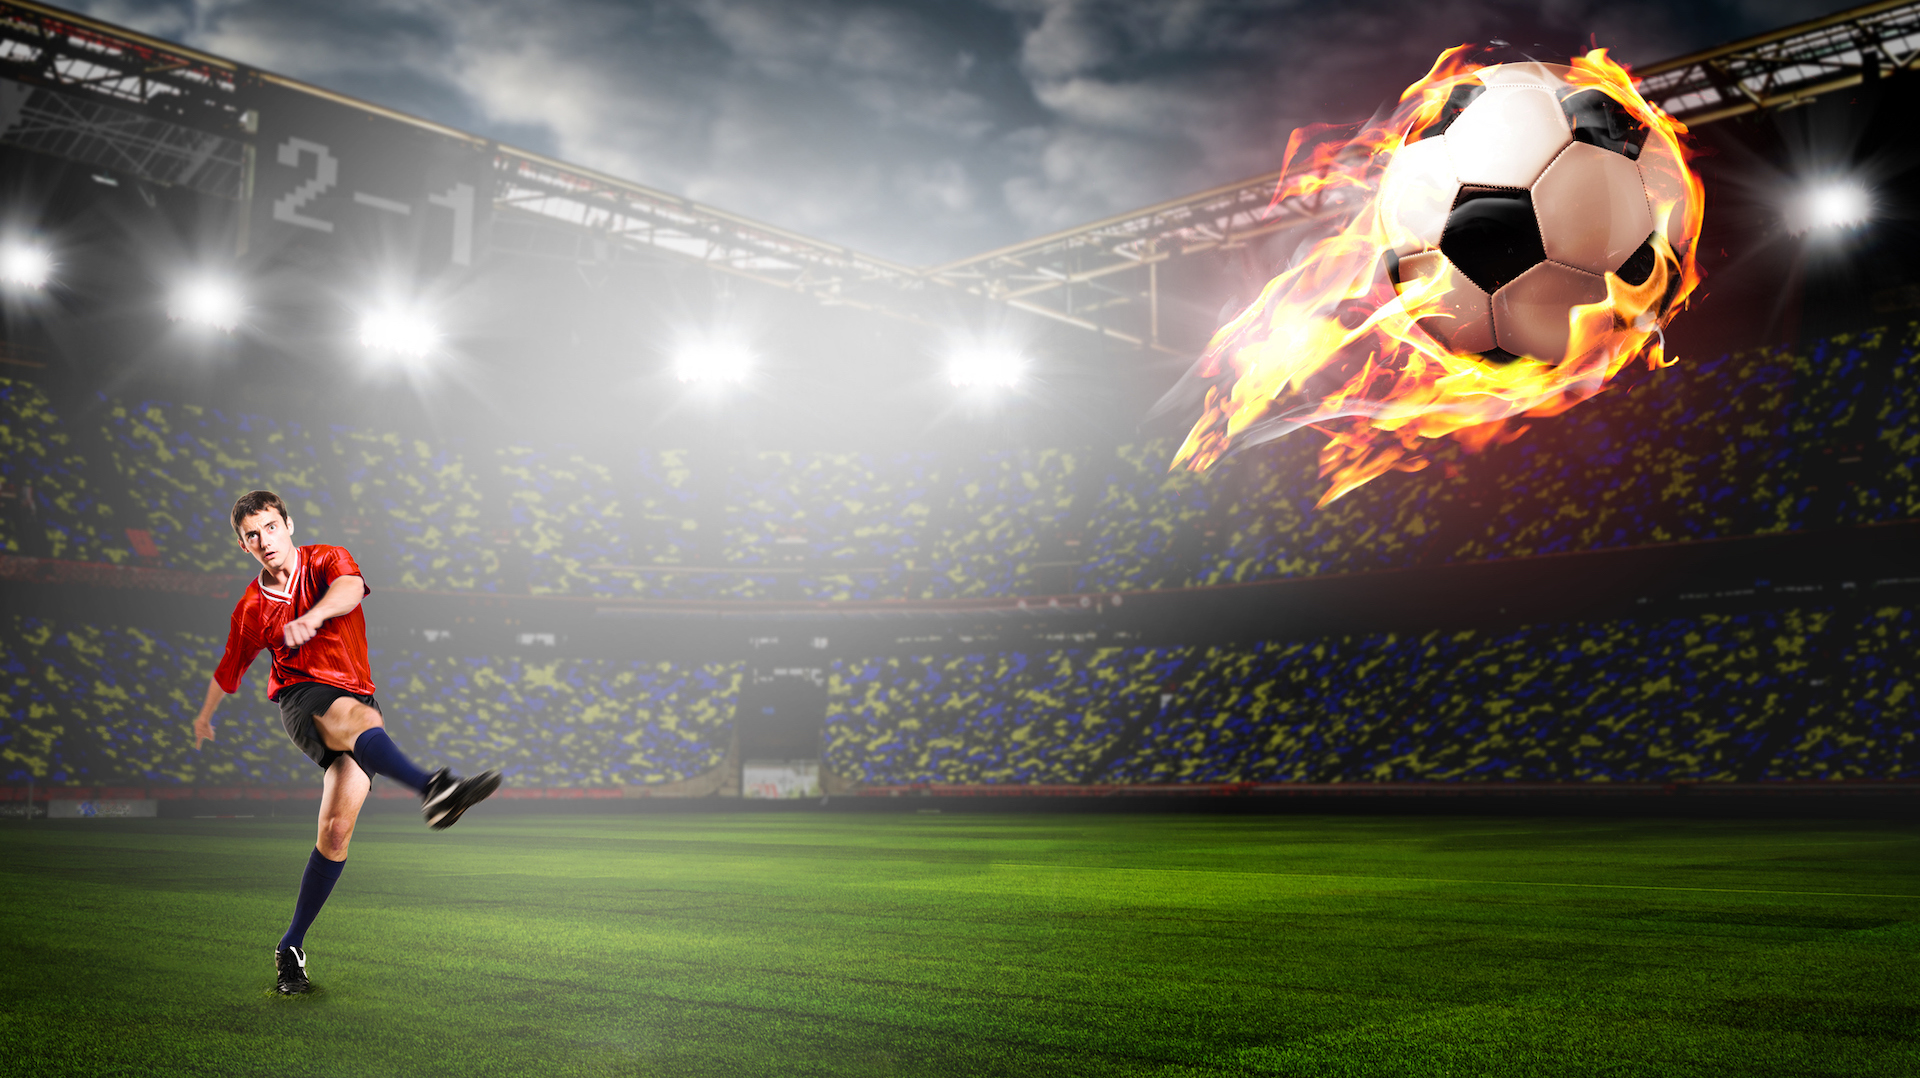 A footballer kicks the ball so hard it bursts into flames